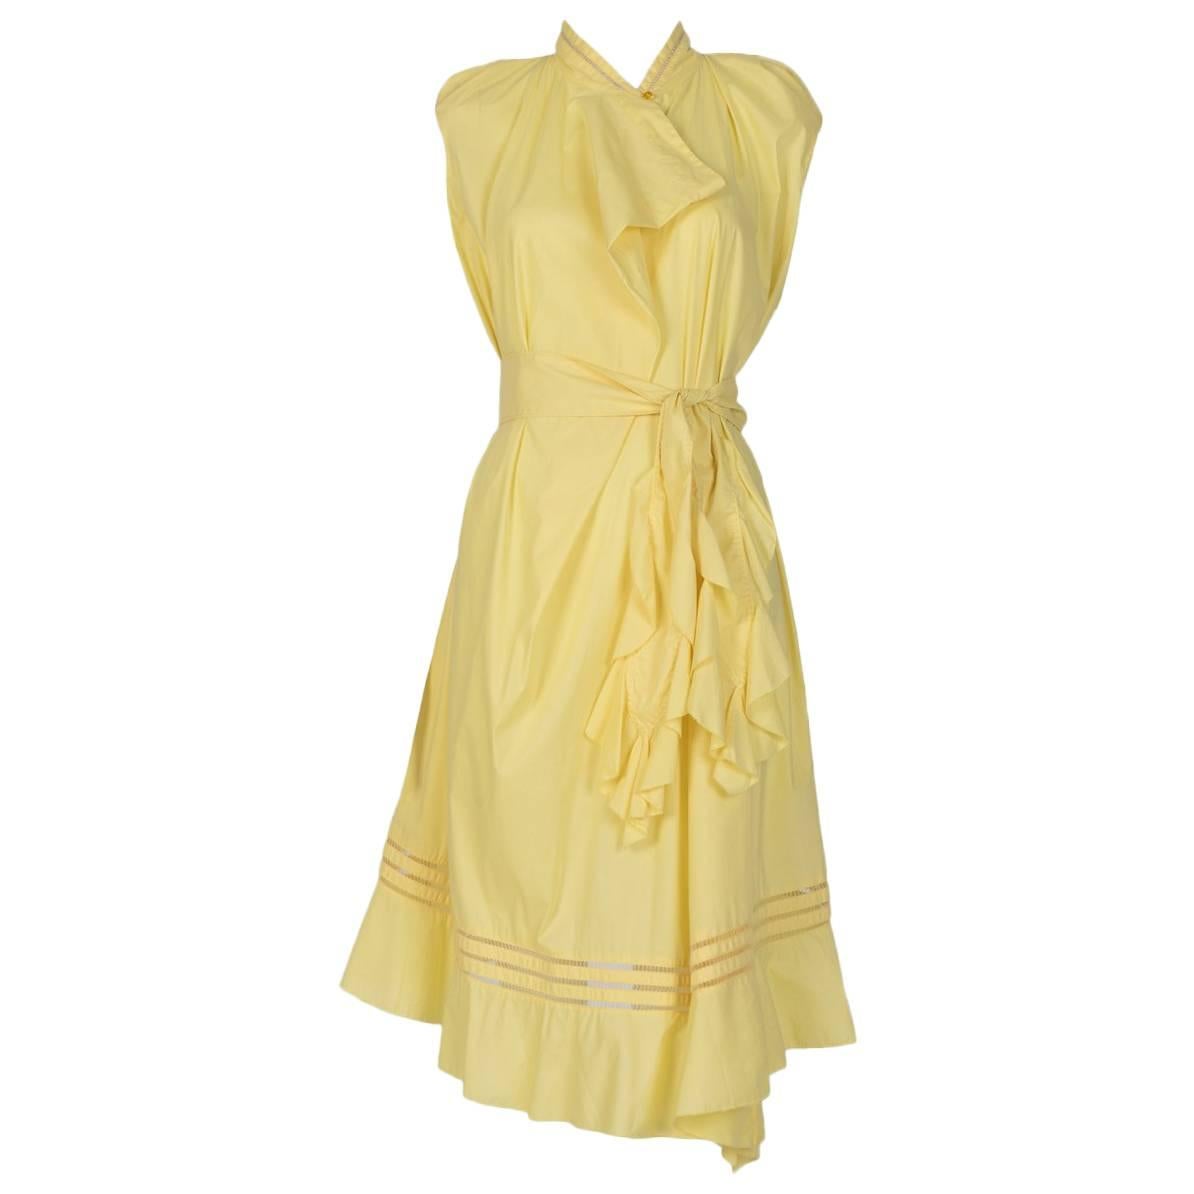  ZAC POSEN Yellow Sun Dress For Sale